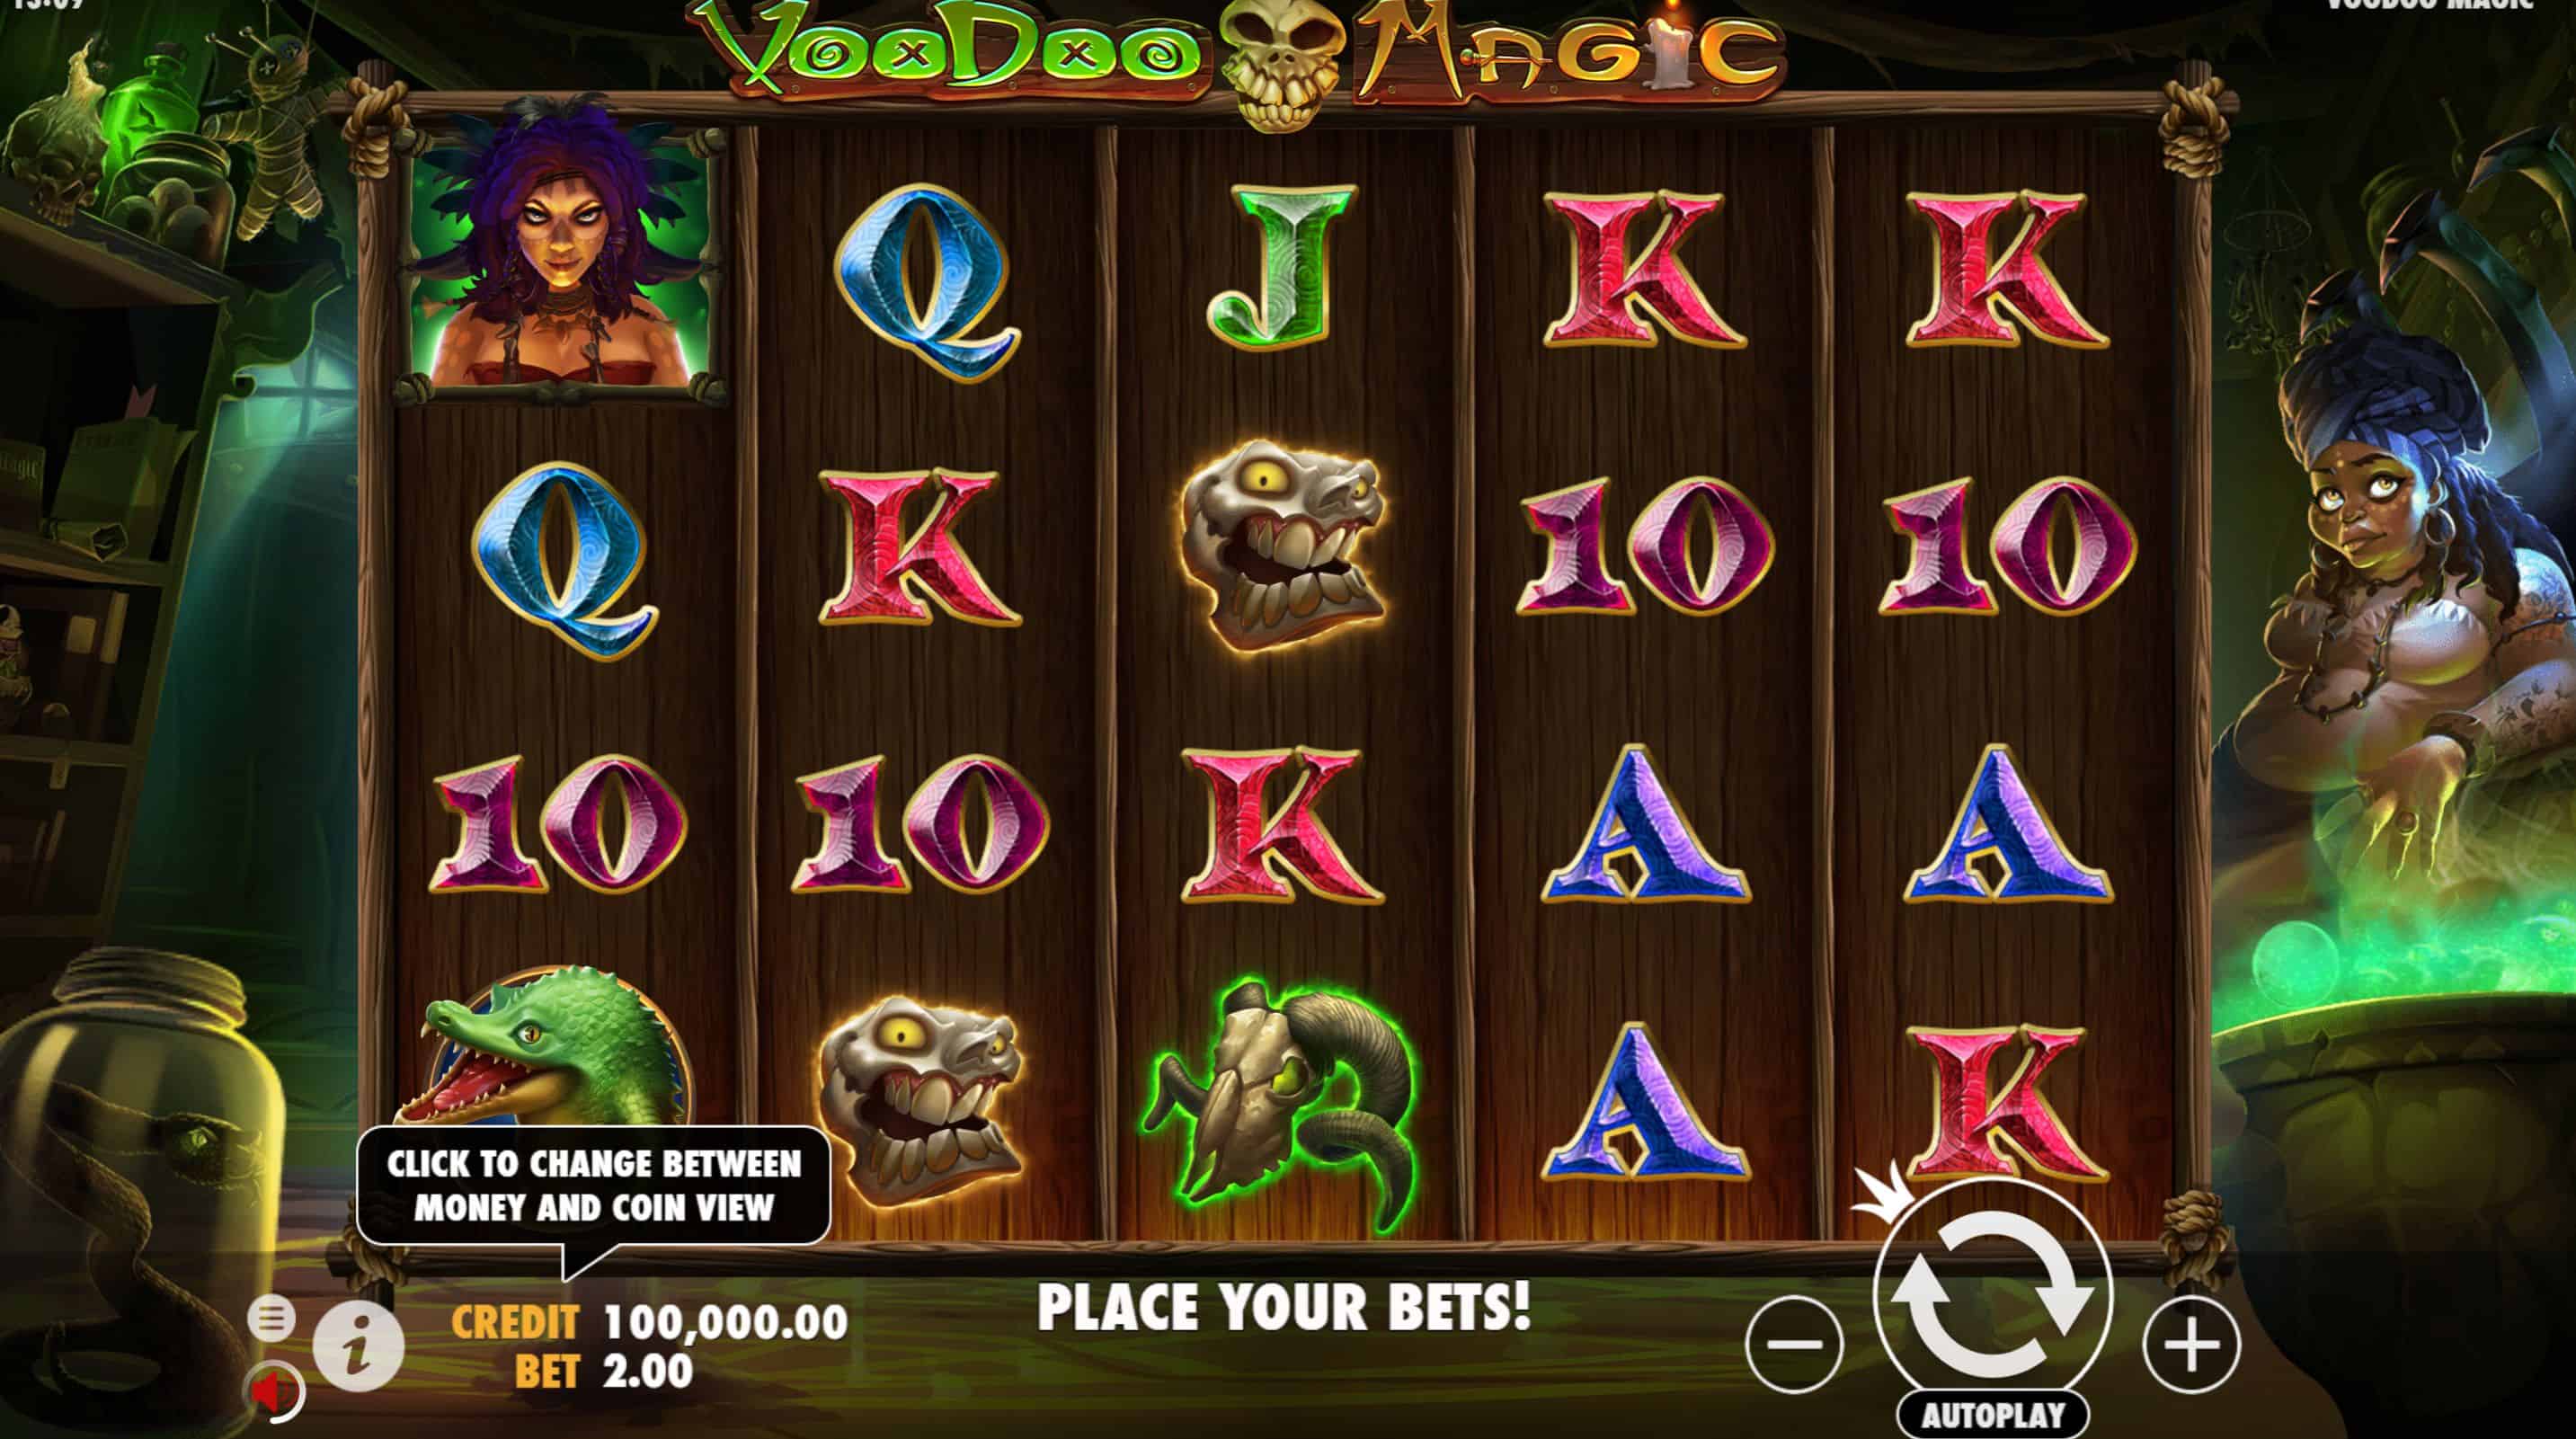 Voodoo Magic Slot Game Free Play at Casino Ireland 01